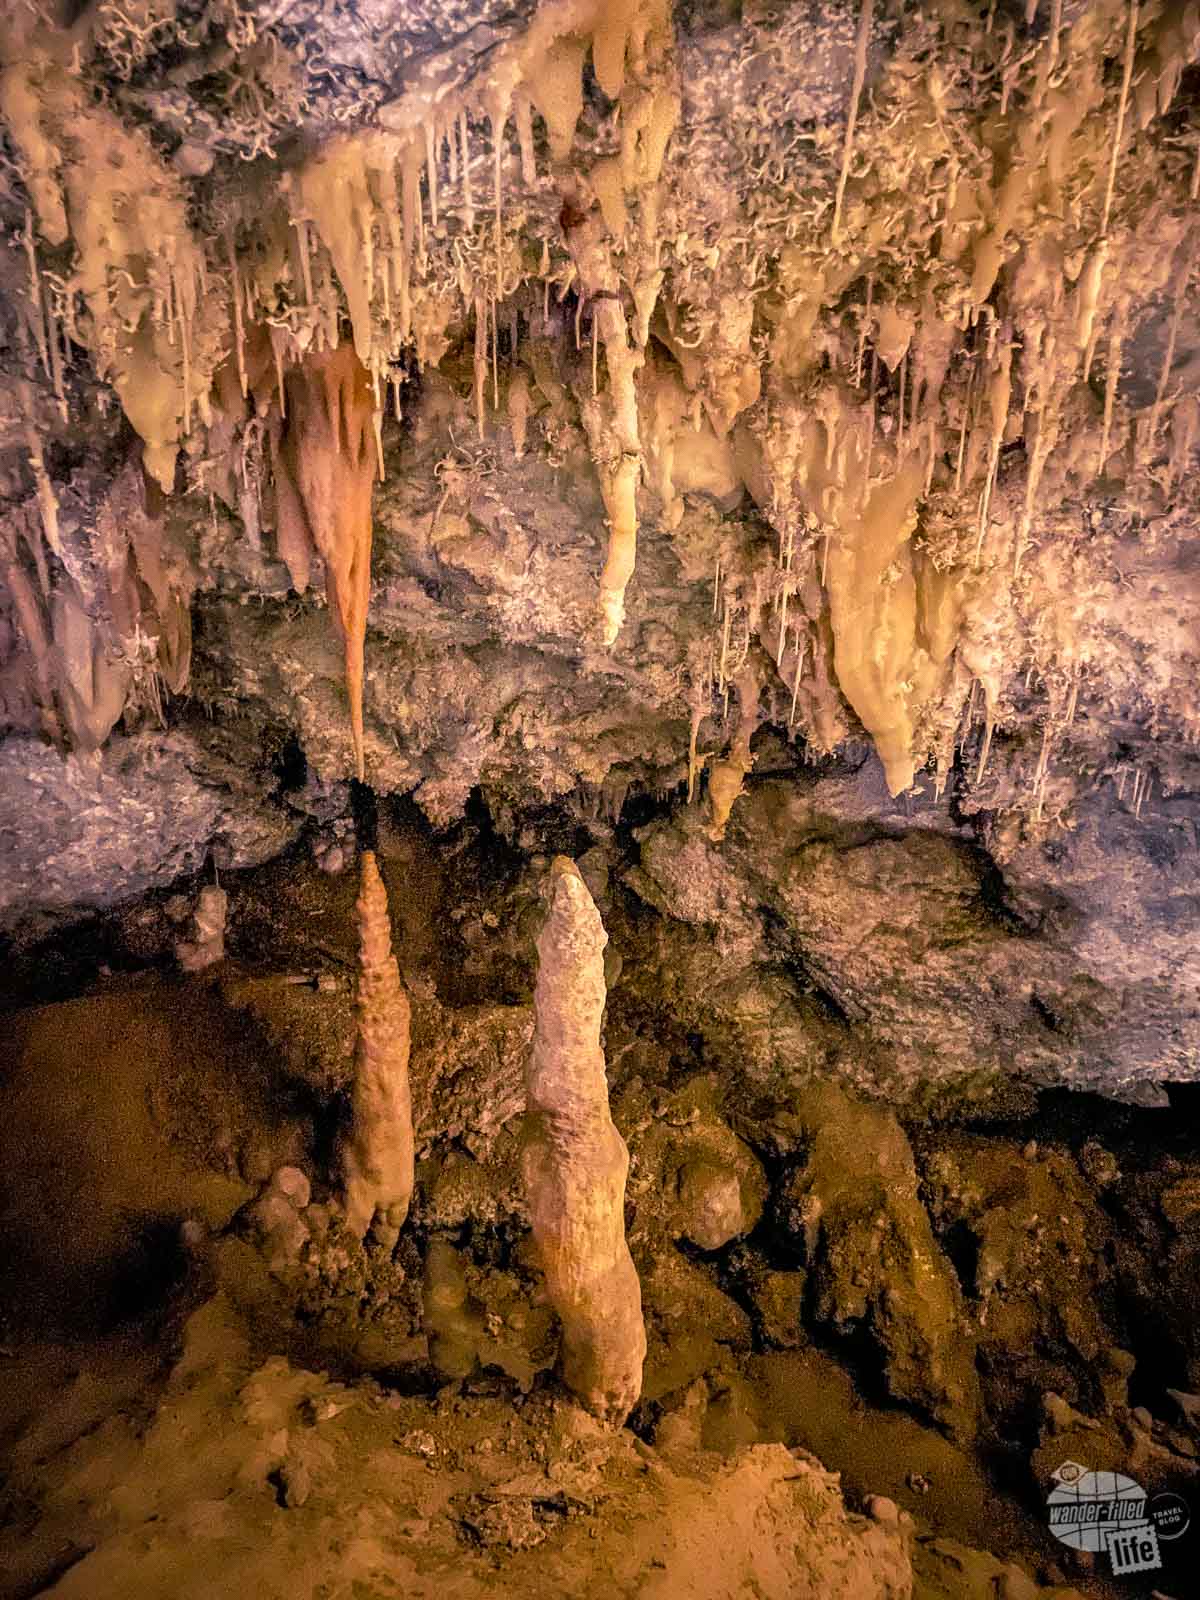 Stalactites and Stalagmites inside Timpanogos Cave.